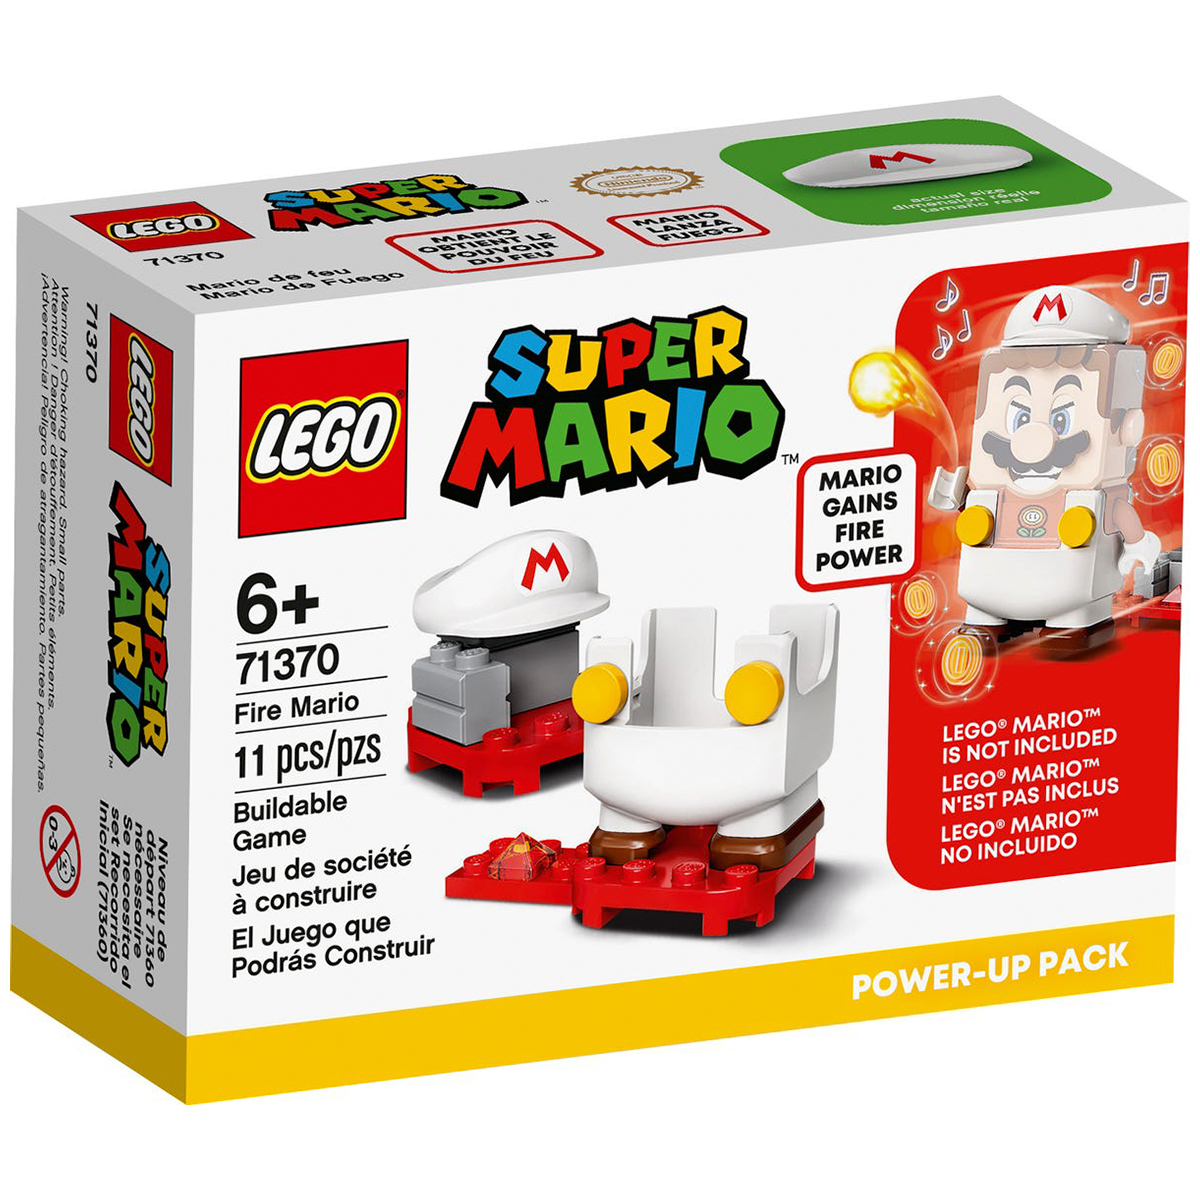 LEGO Super Mario™ - Mario de Hélice - Pacote Power Up - 71371